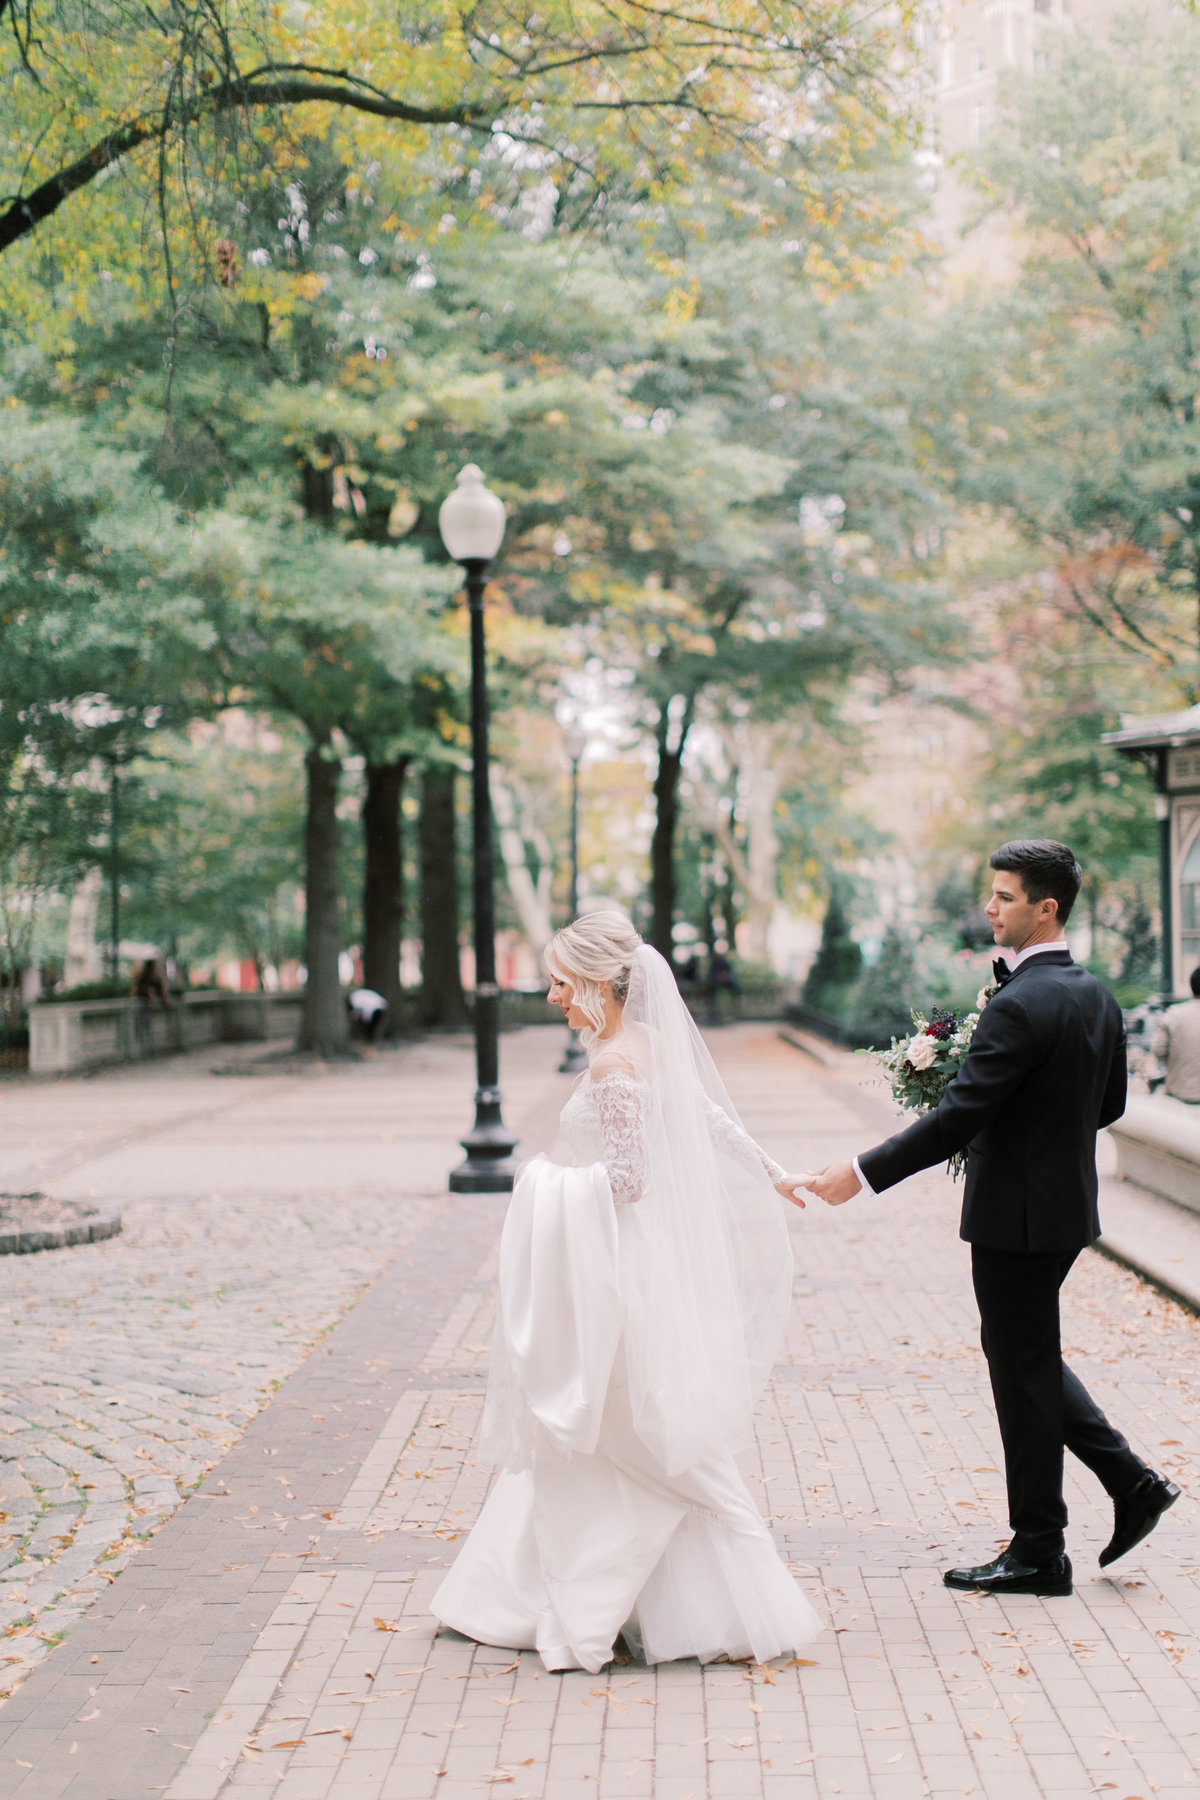 bride and groom walking down street in wedding attire